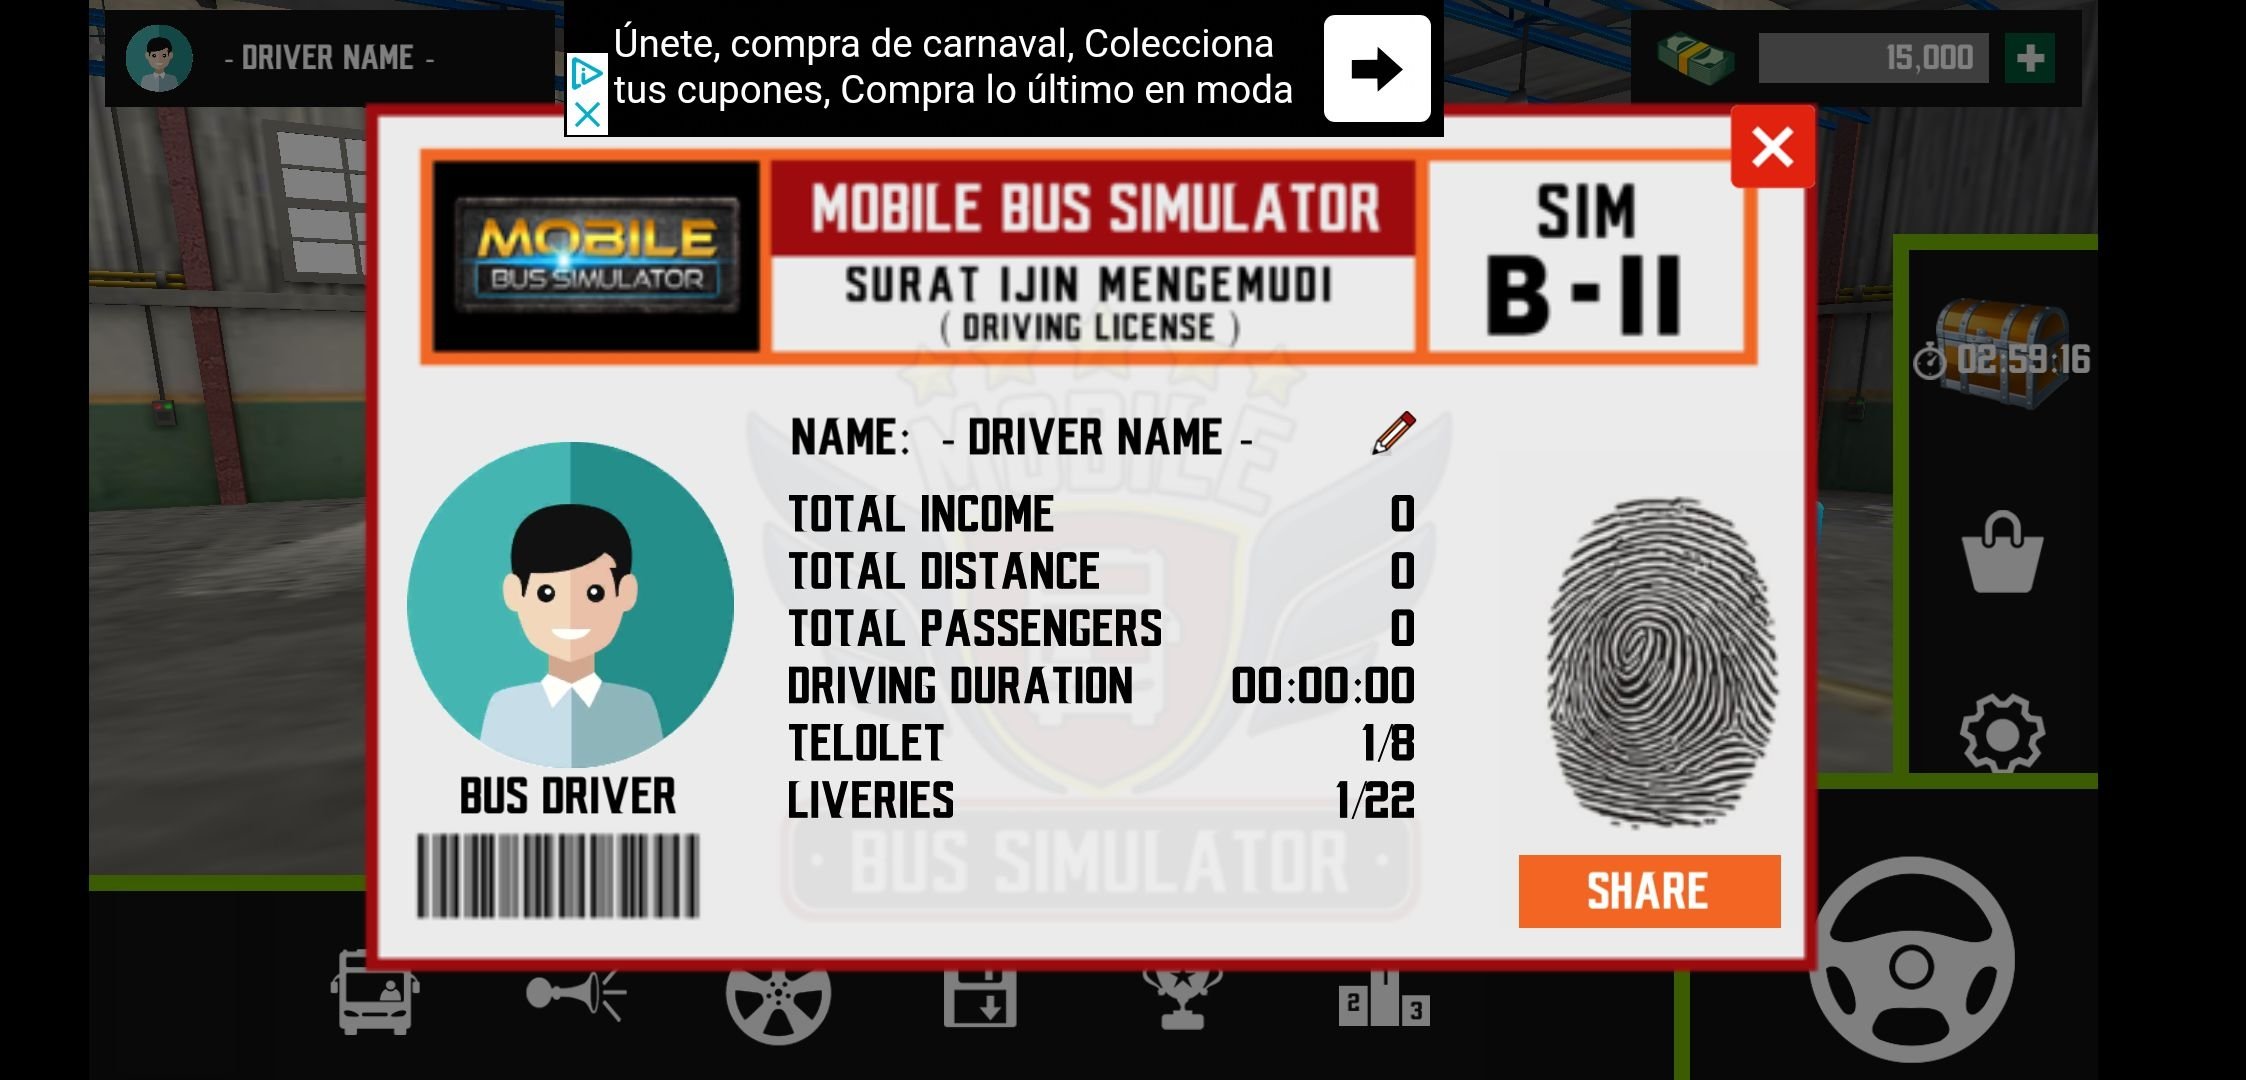 download the last version for windows Bus Simulator 2023